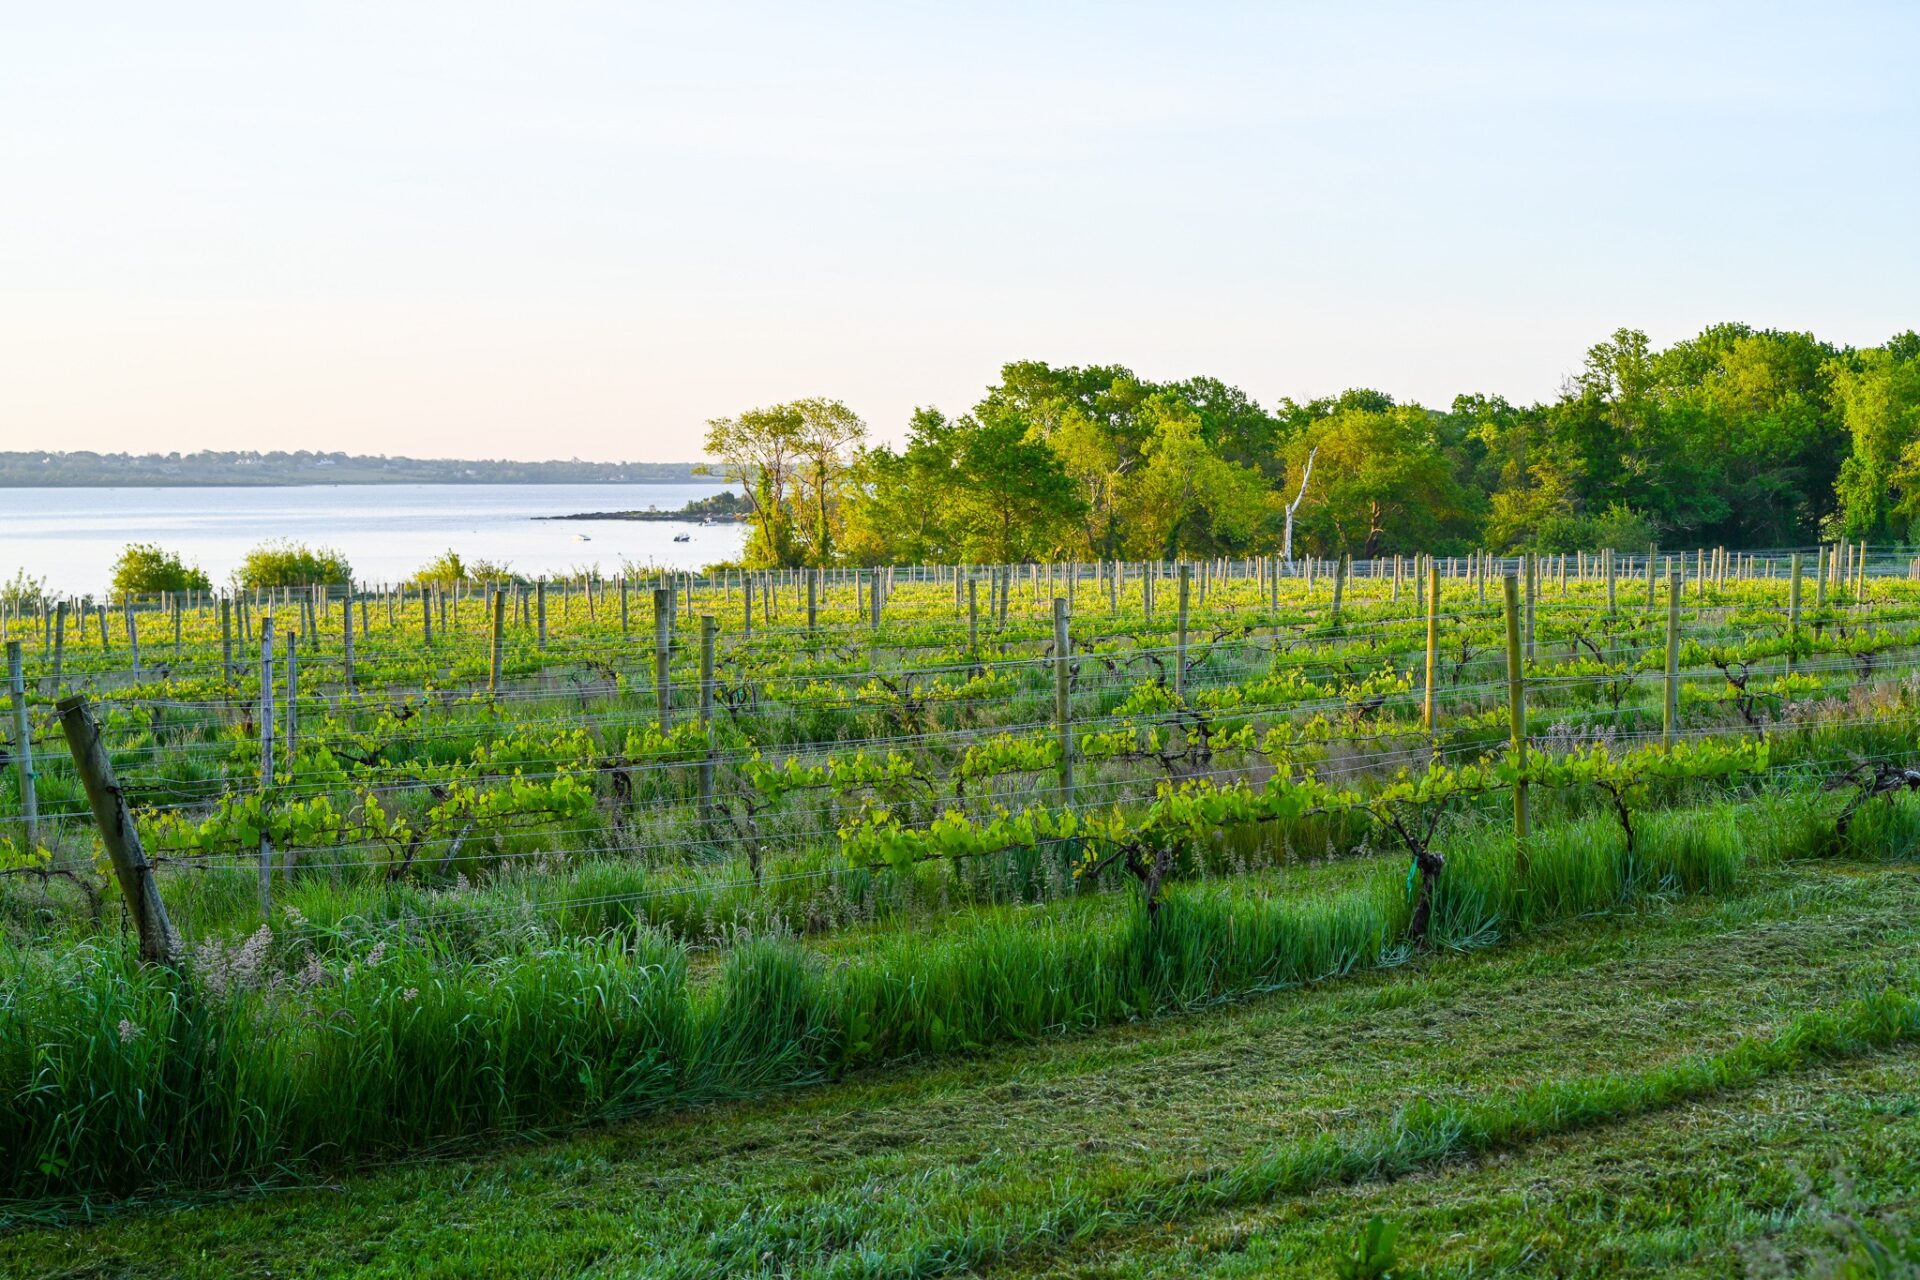 Vineyard vines growing next to a bay